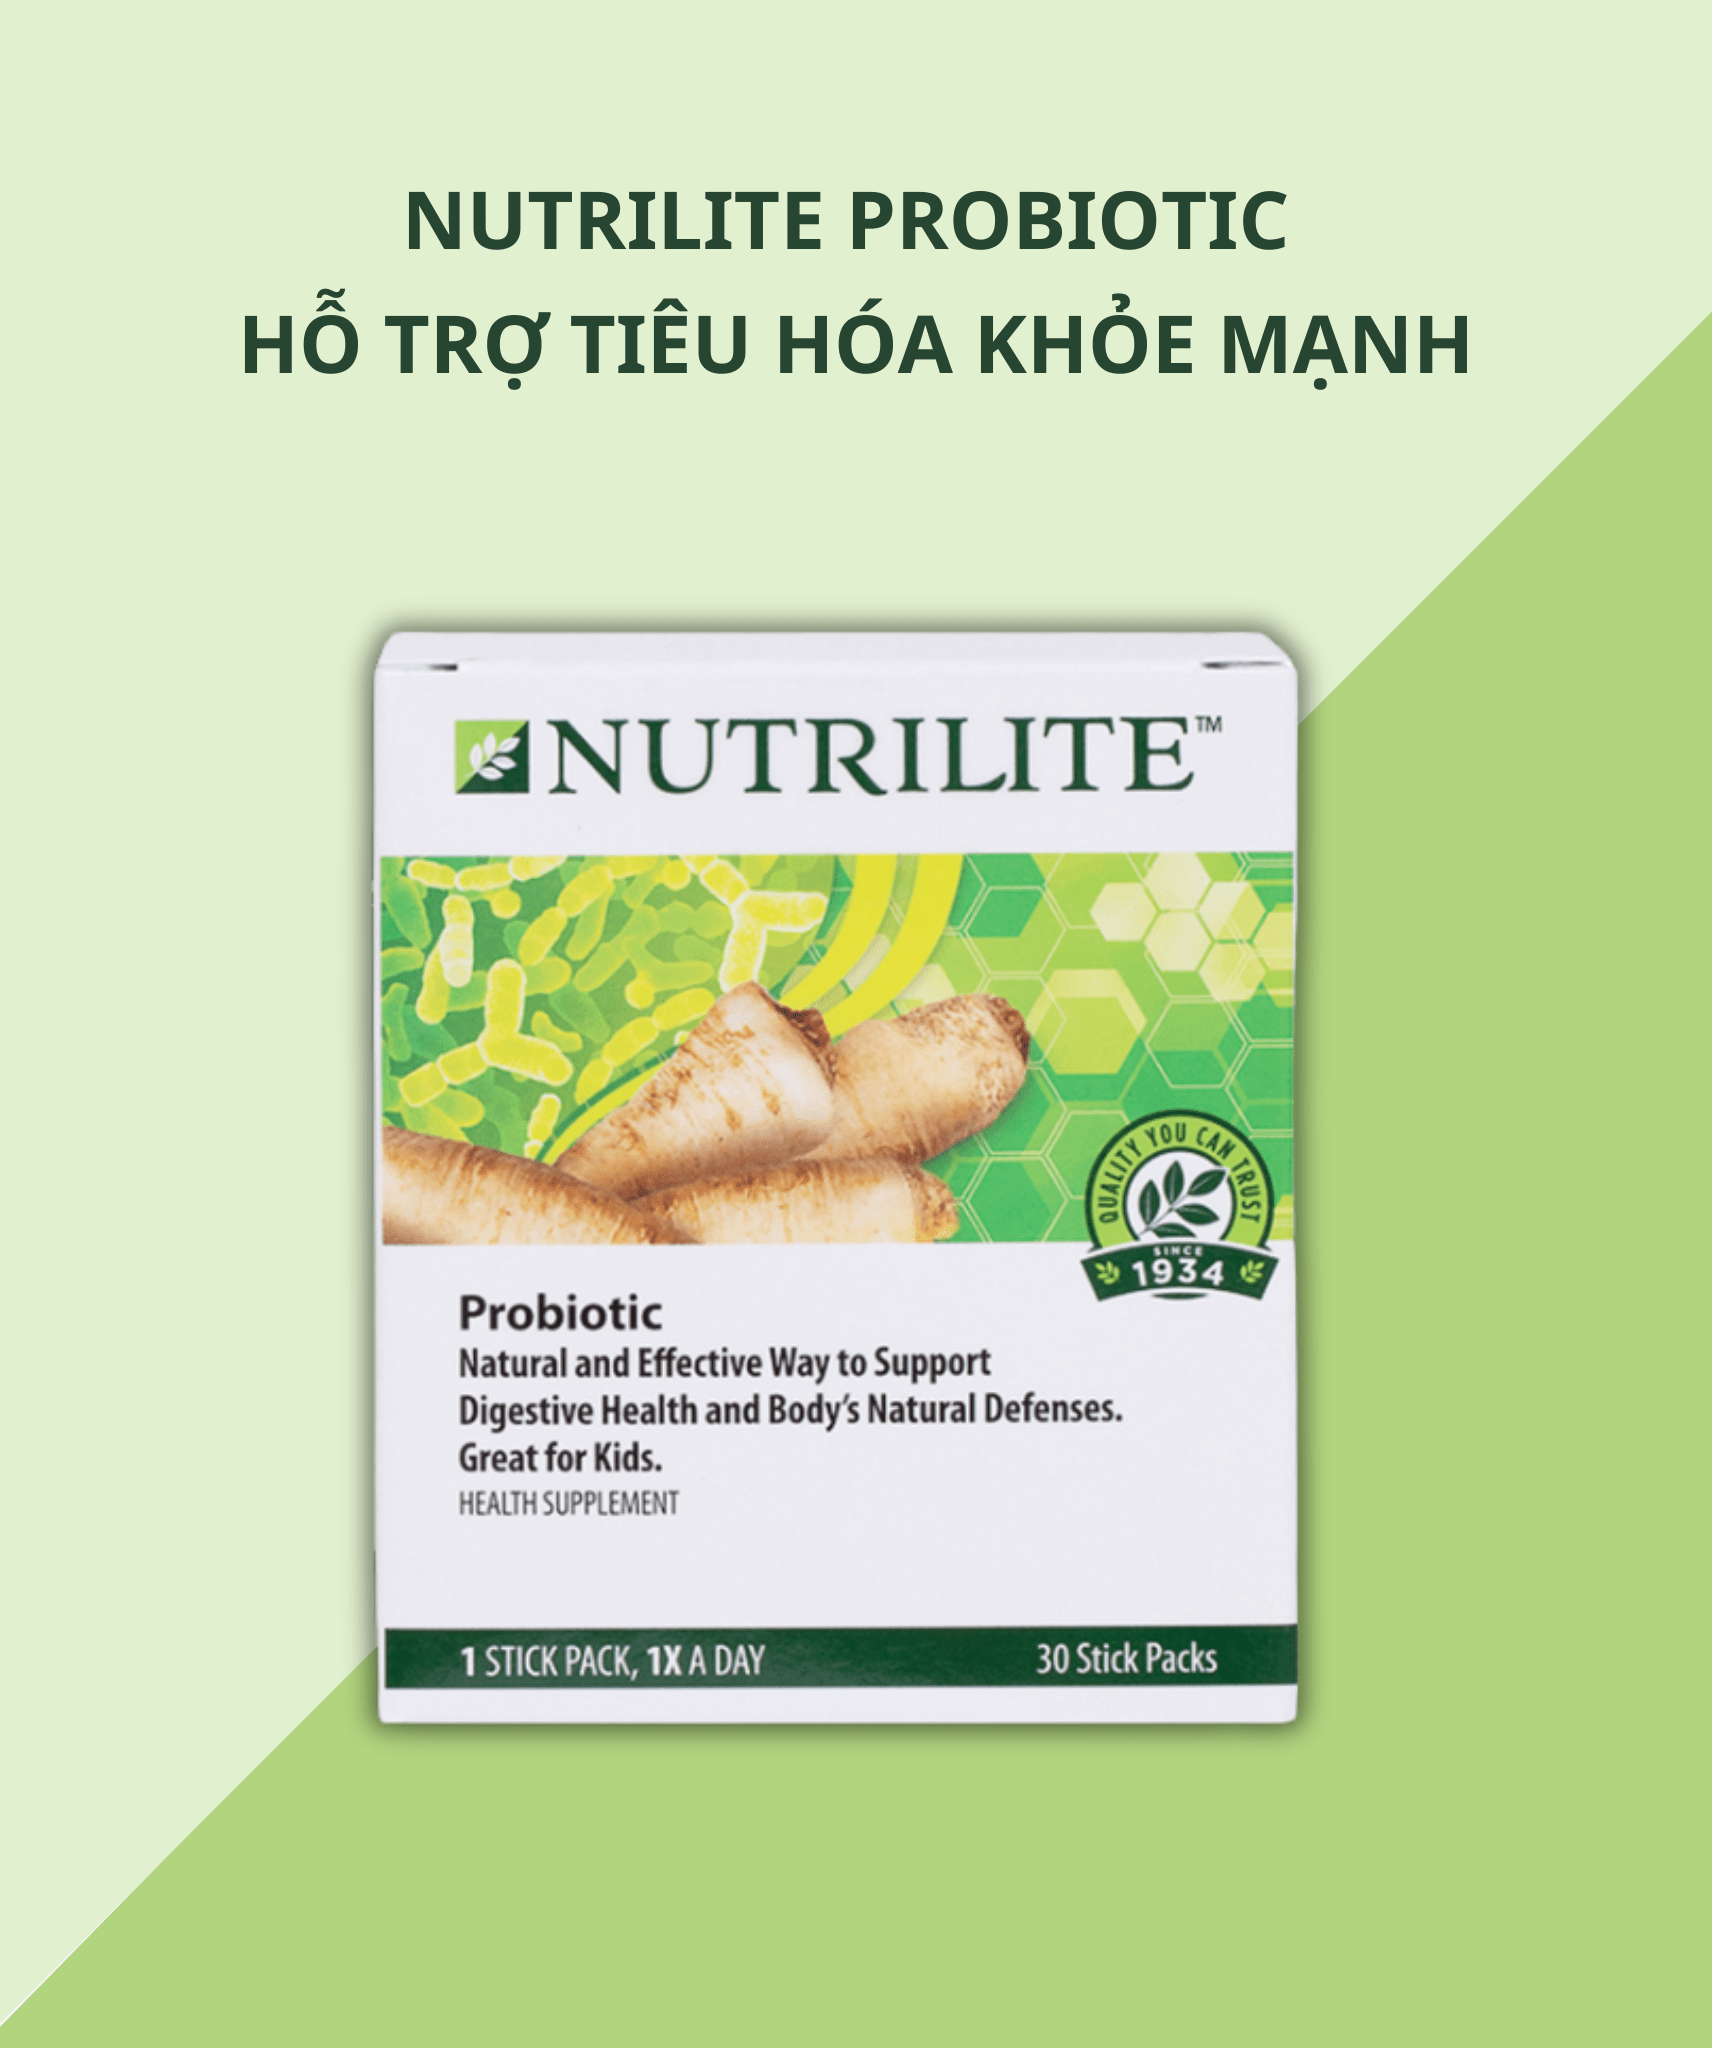 Nutrilite Probiotic bổ sung đến 6.3 tỷ lợi khuẩn